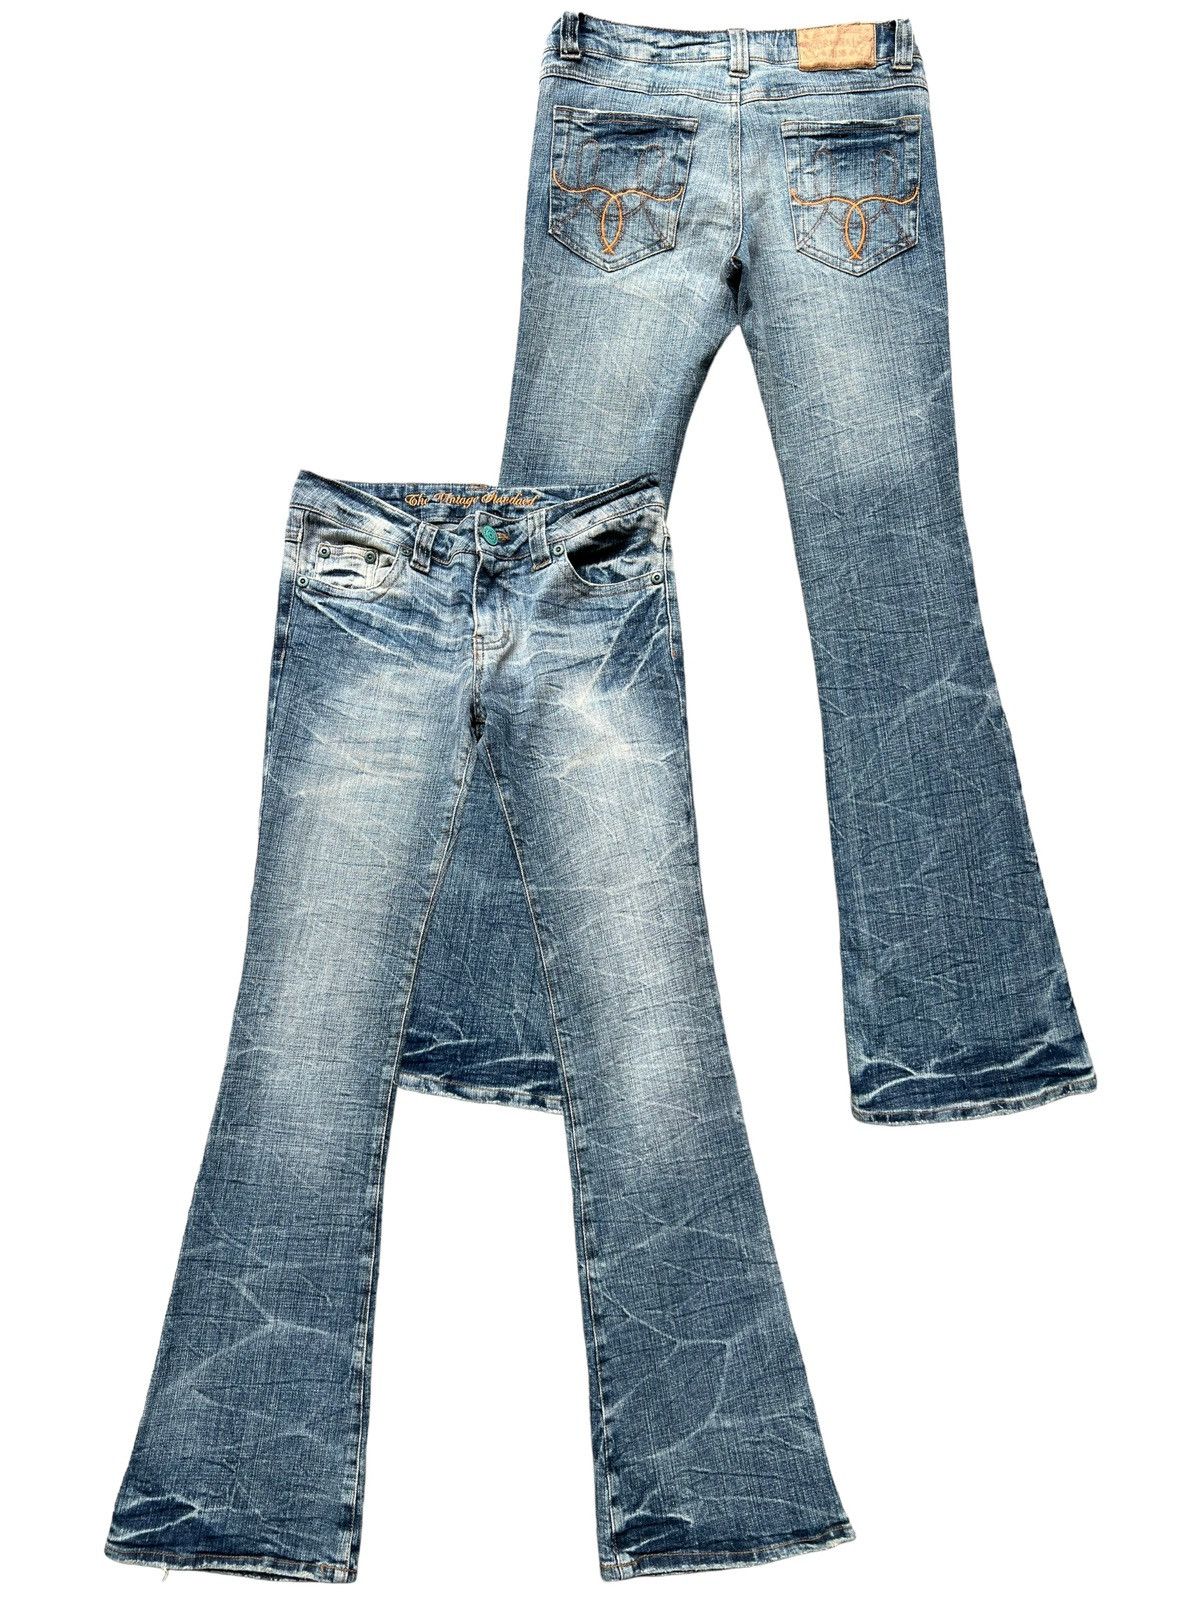 Hype - Vintage Standard Distressed Lowrise Flare Denim Jeans 29x32 - 1